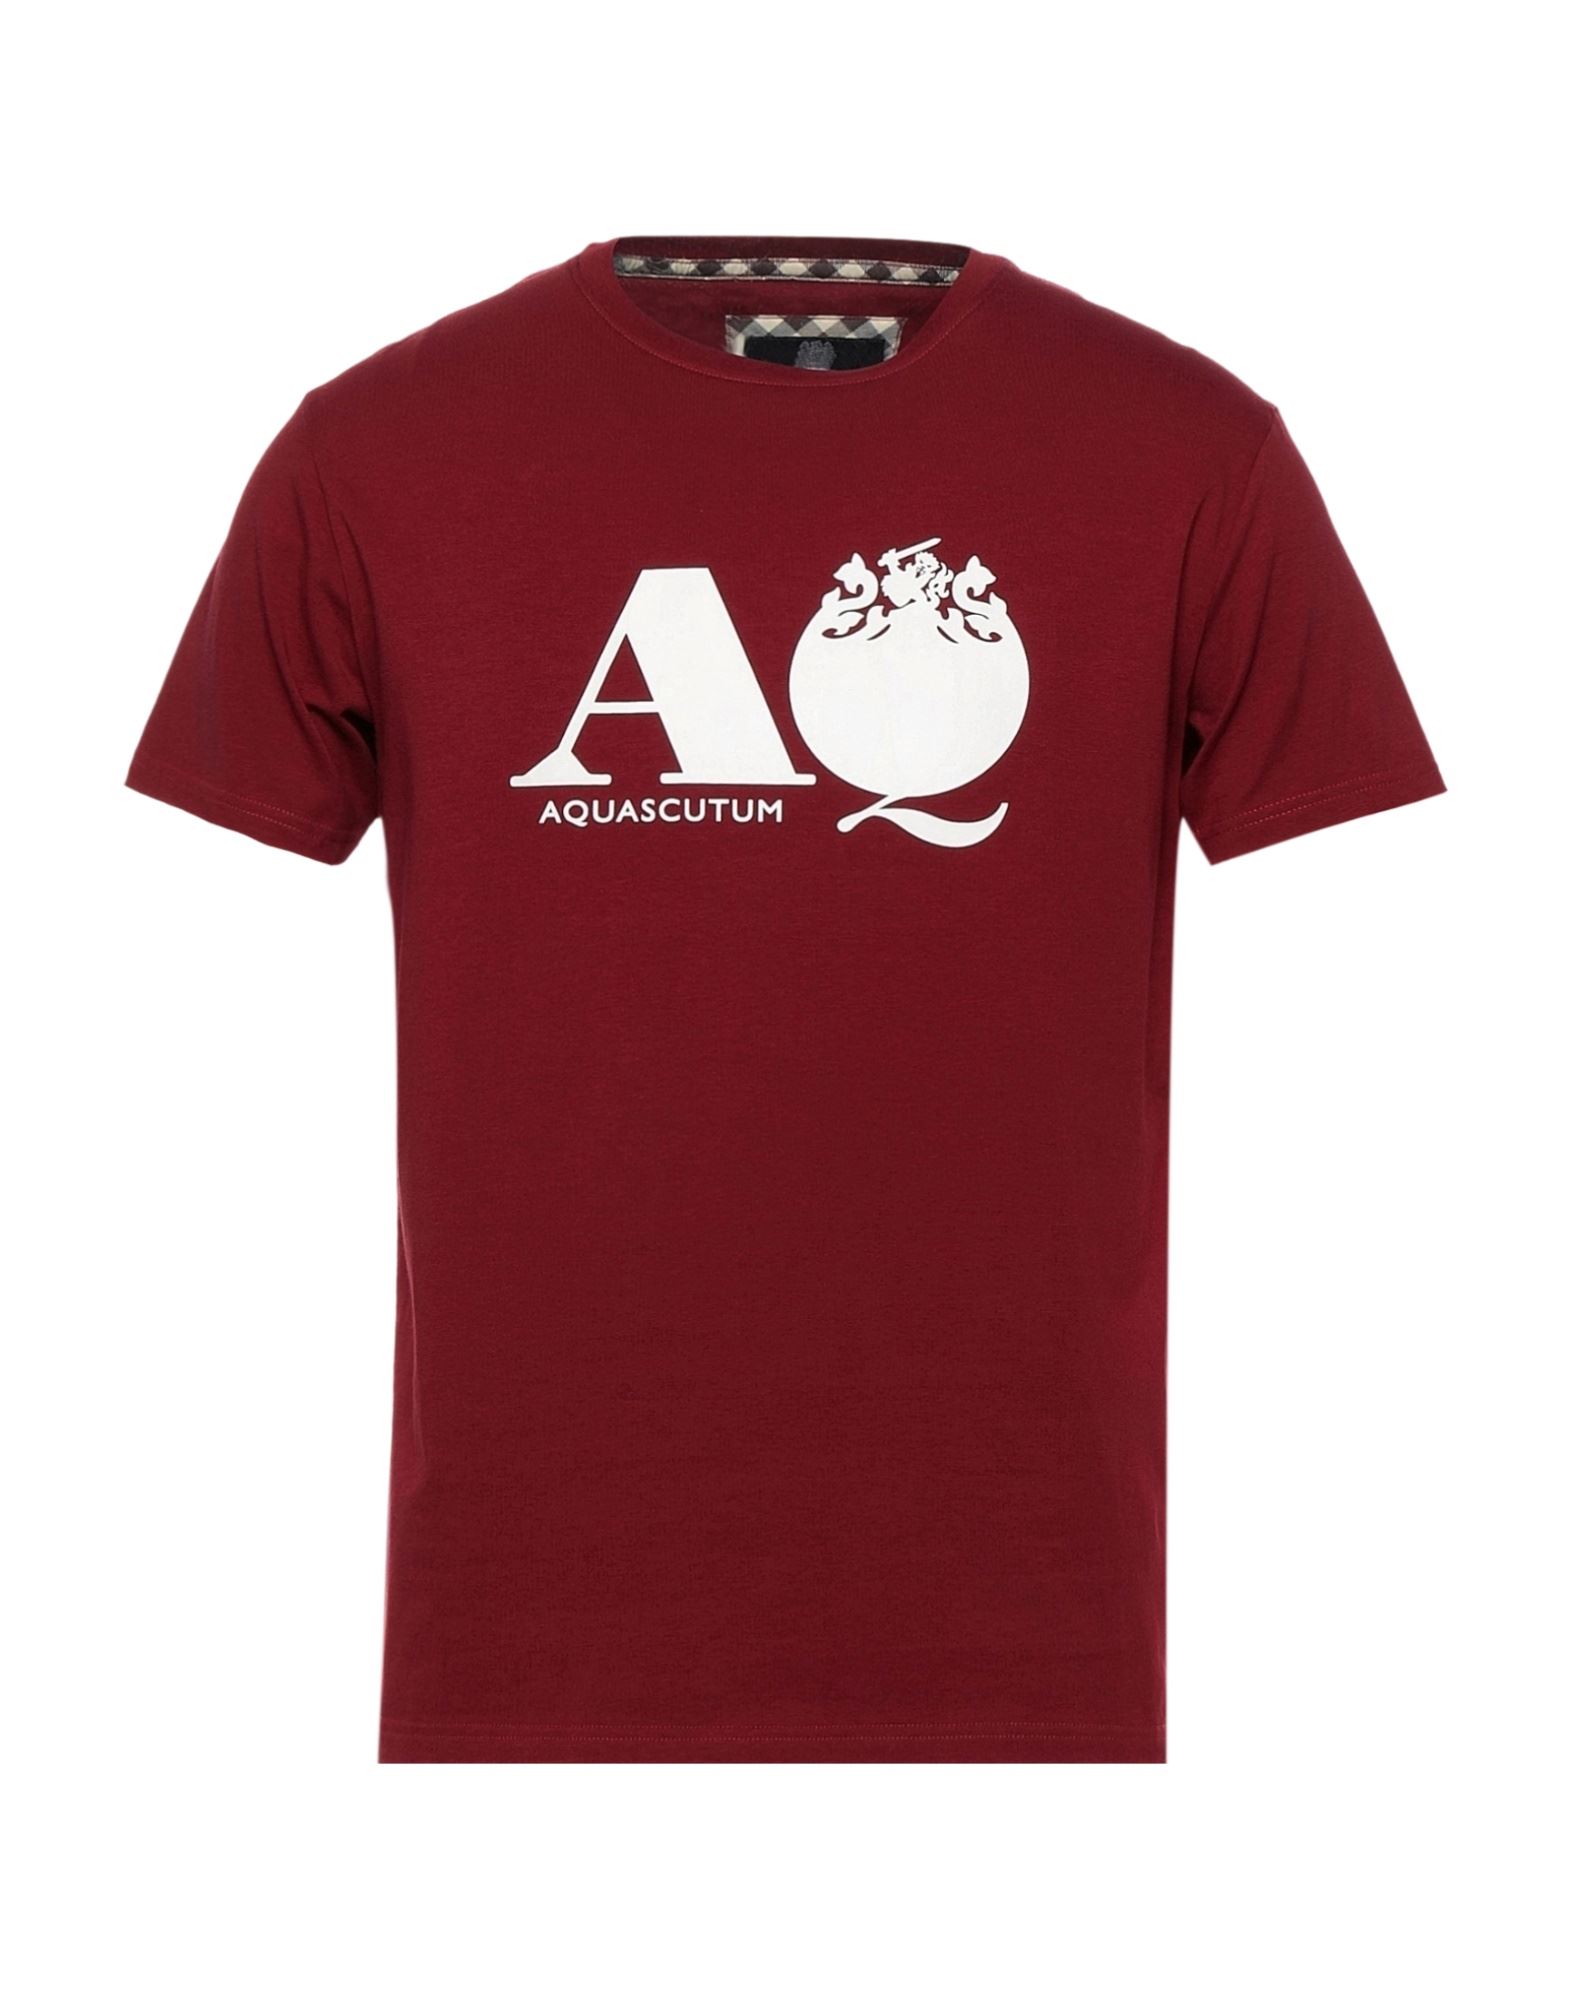 AQUASCUTUM T-shirts Herren Bordeaux von AQUASCUTUM